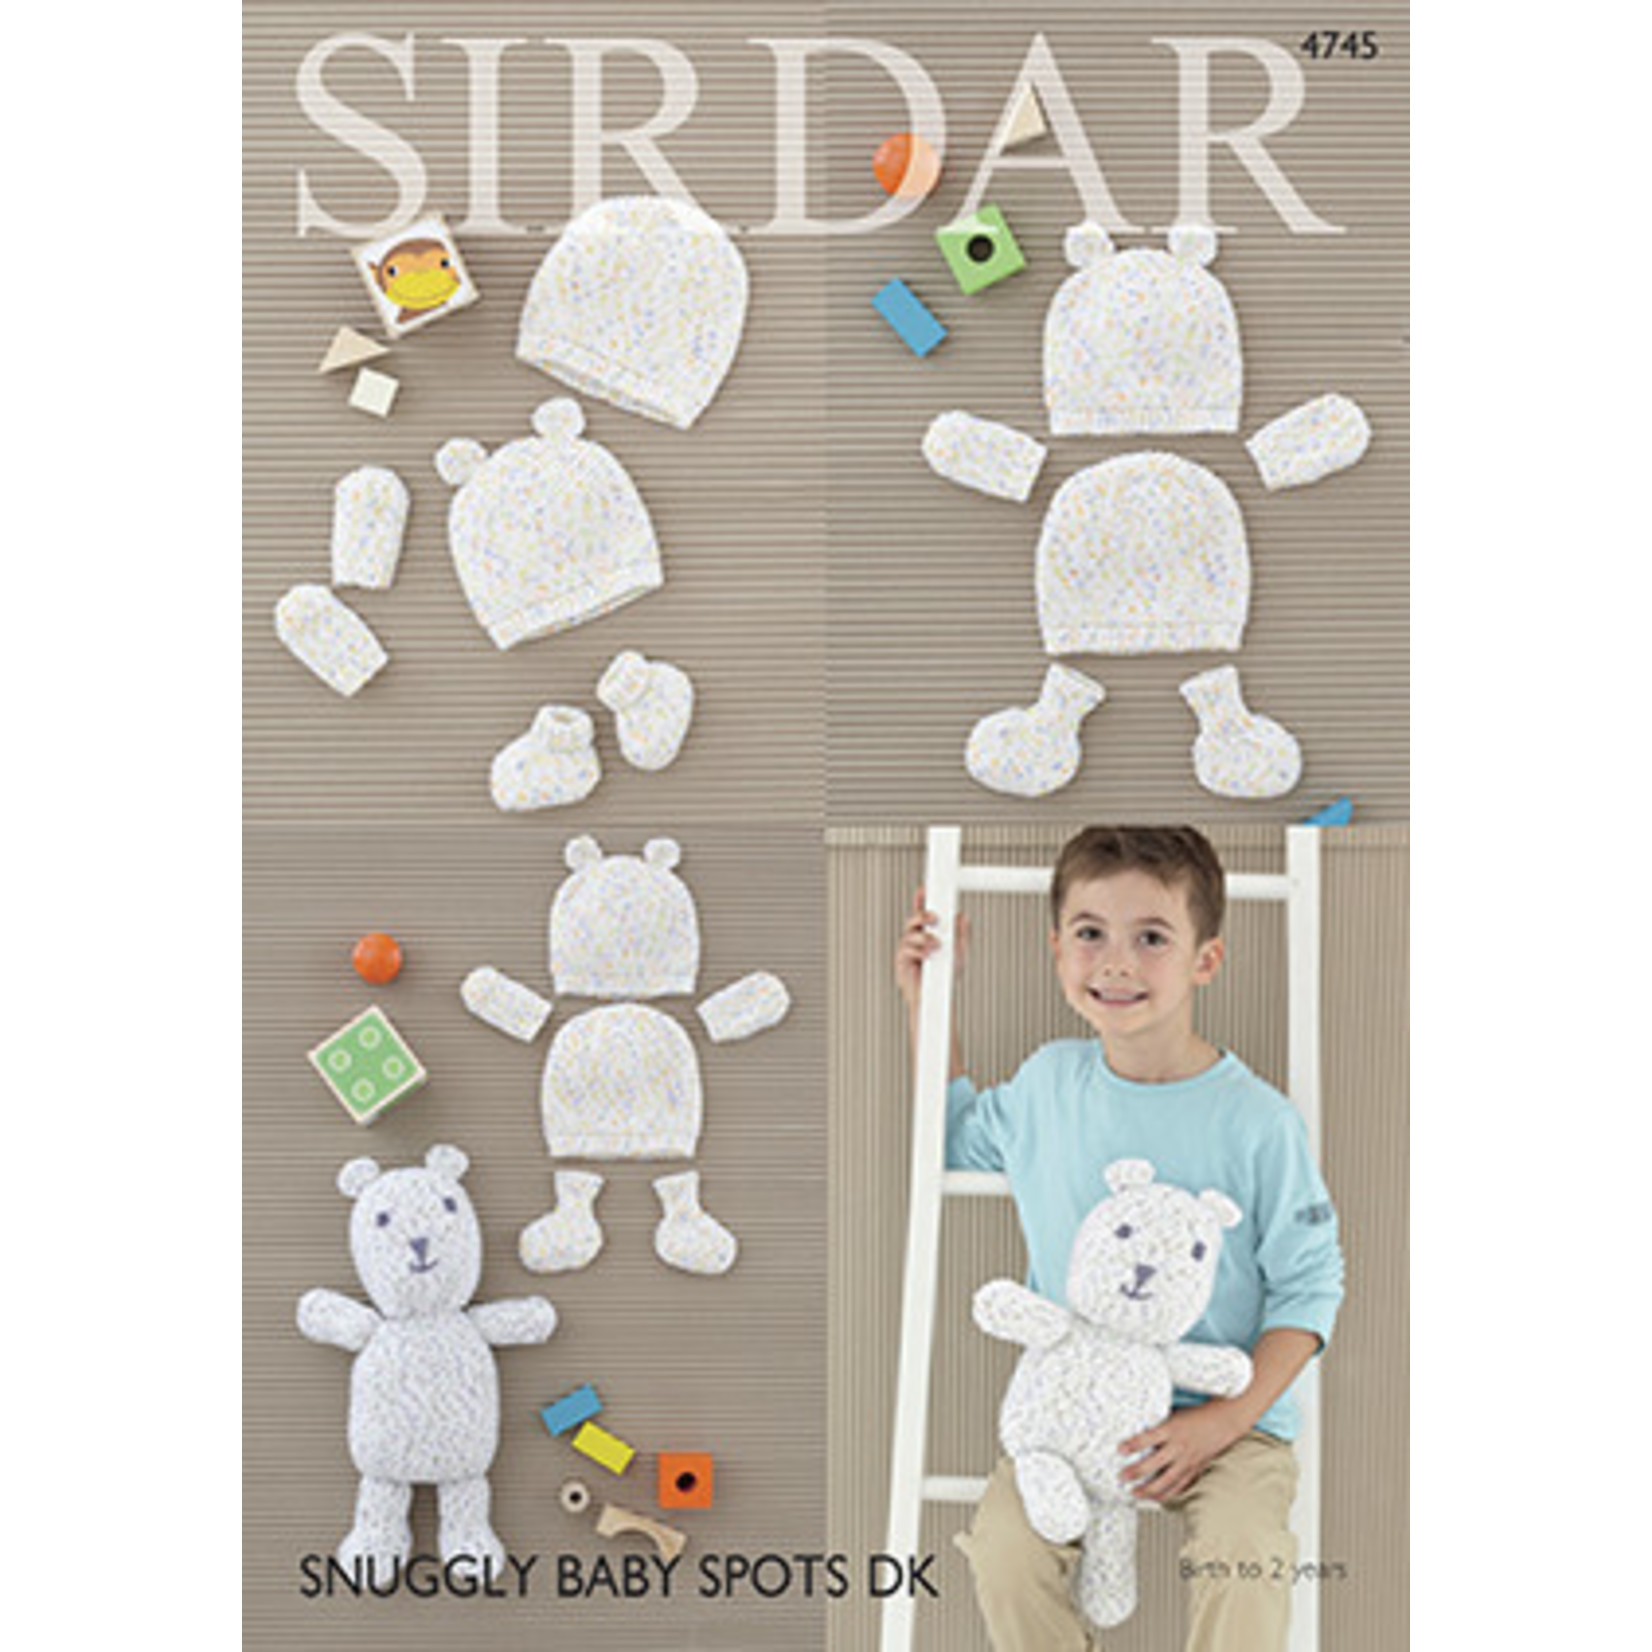 Sirdar Booklet